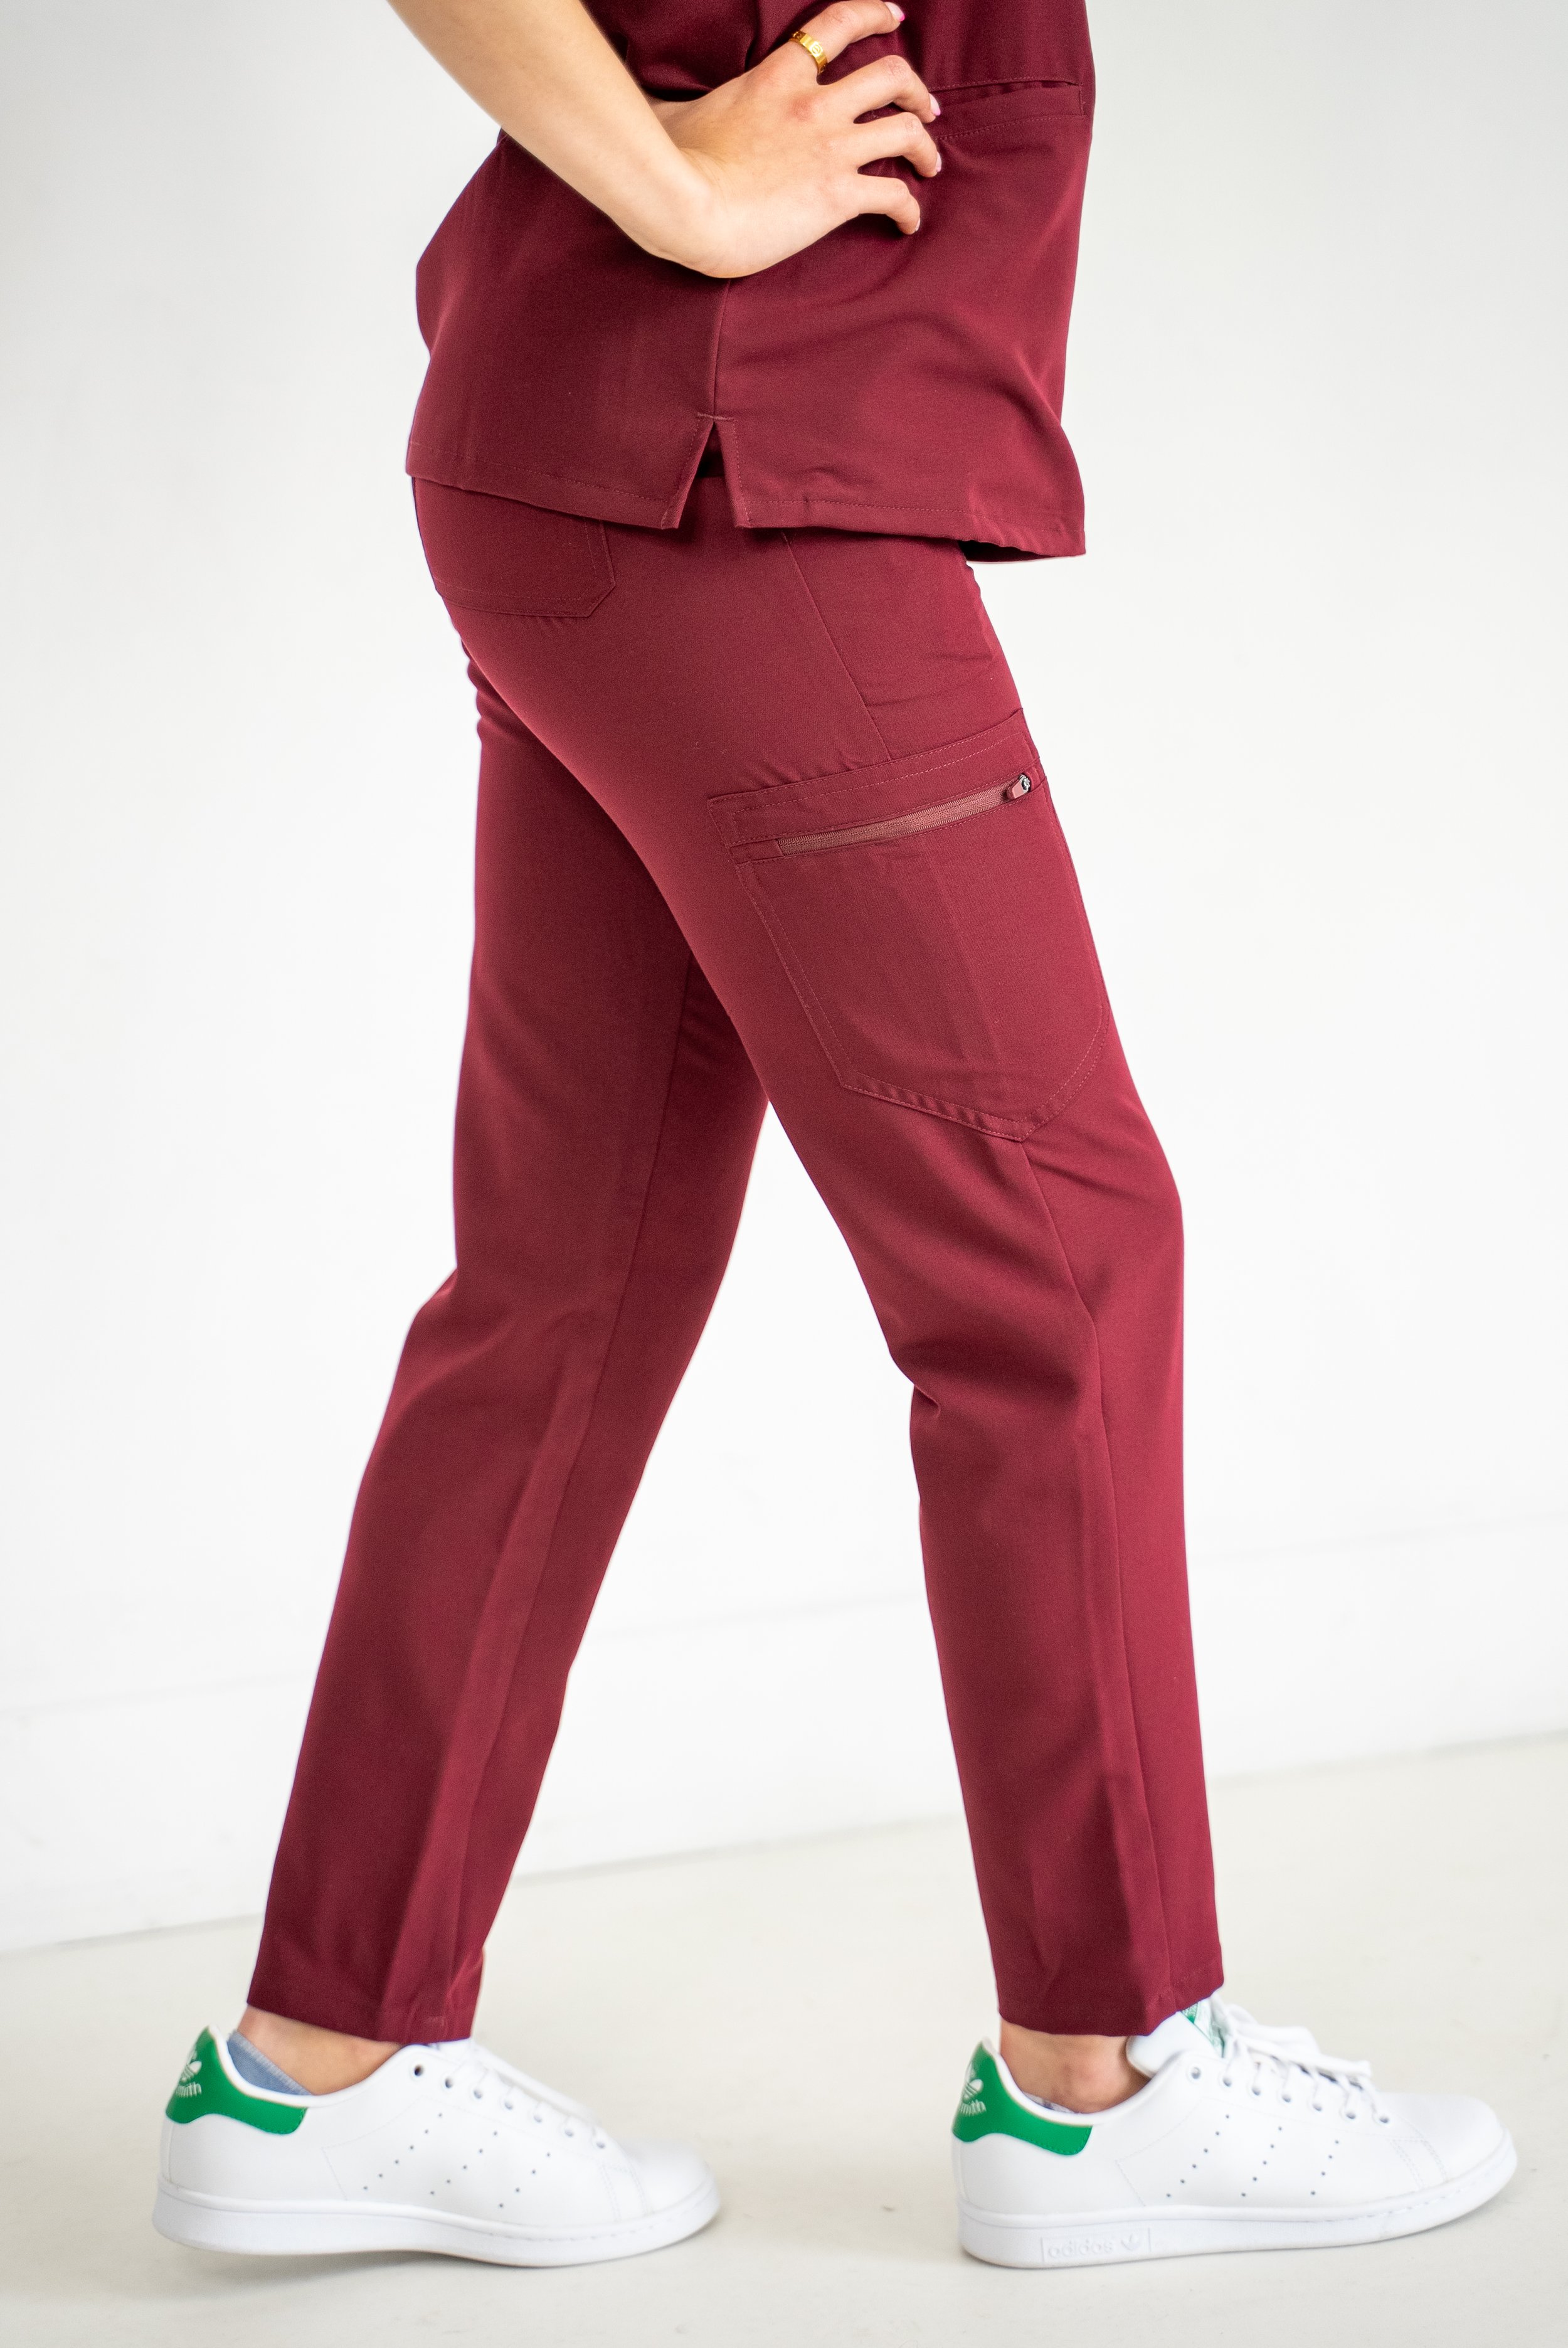 Women's Merlot Red Scrub Pants